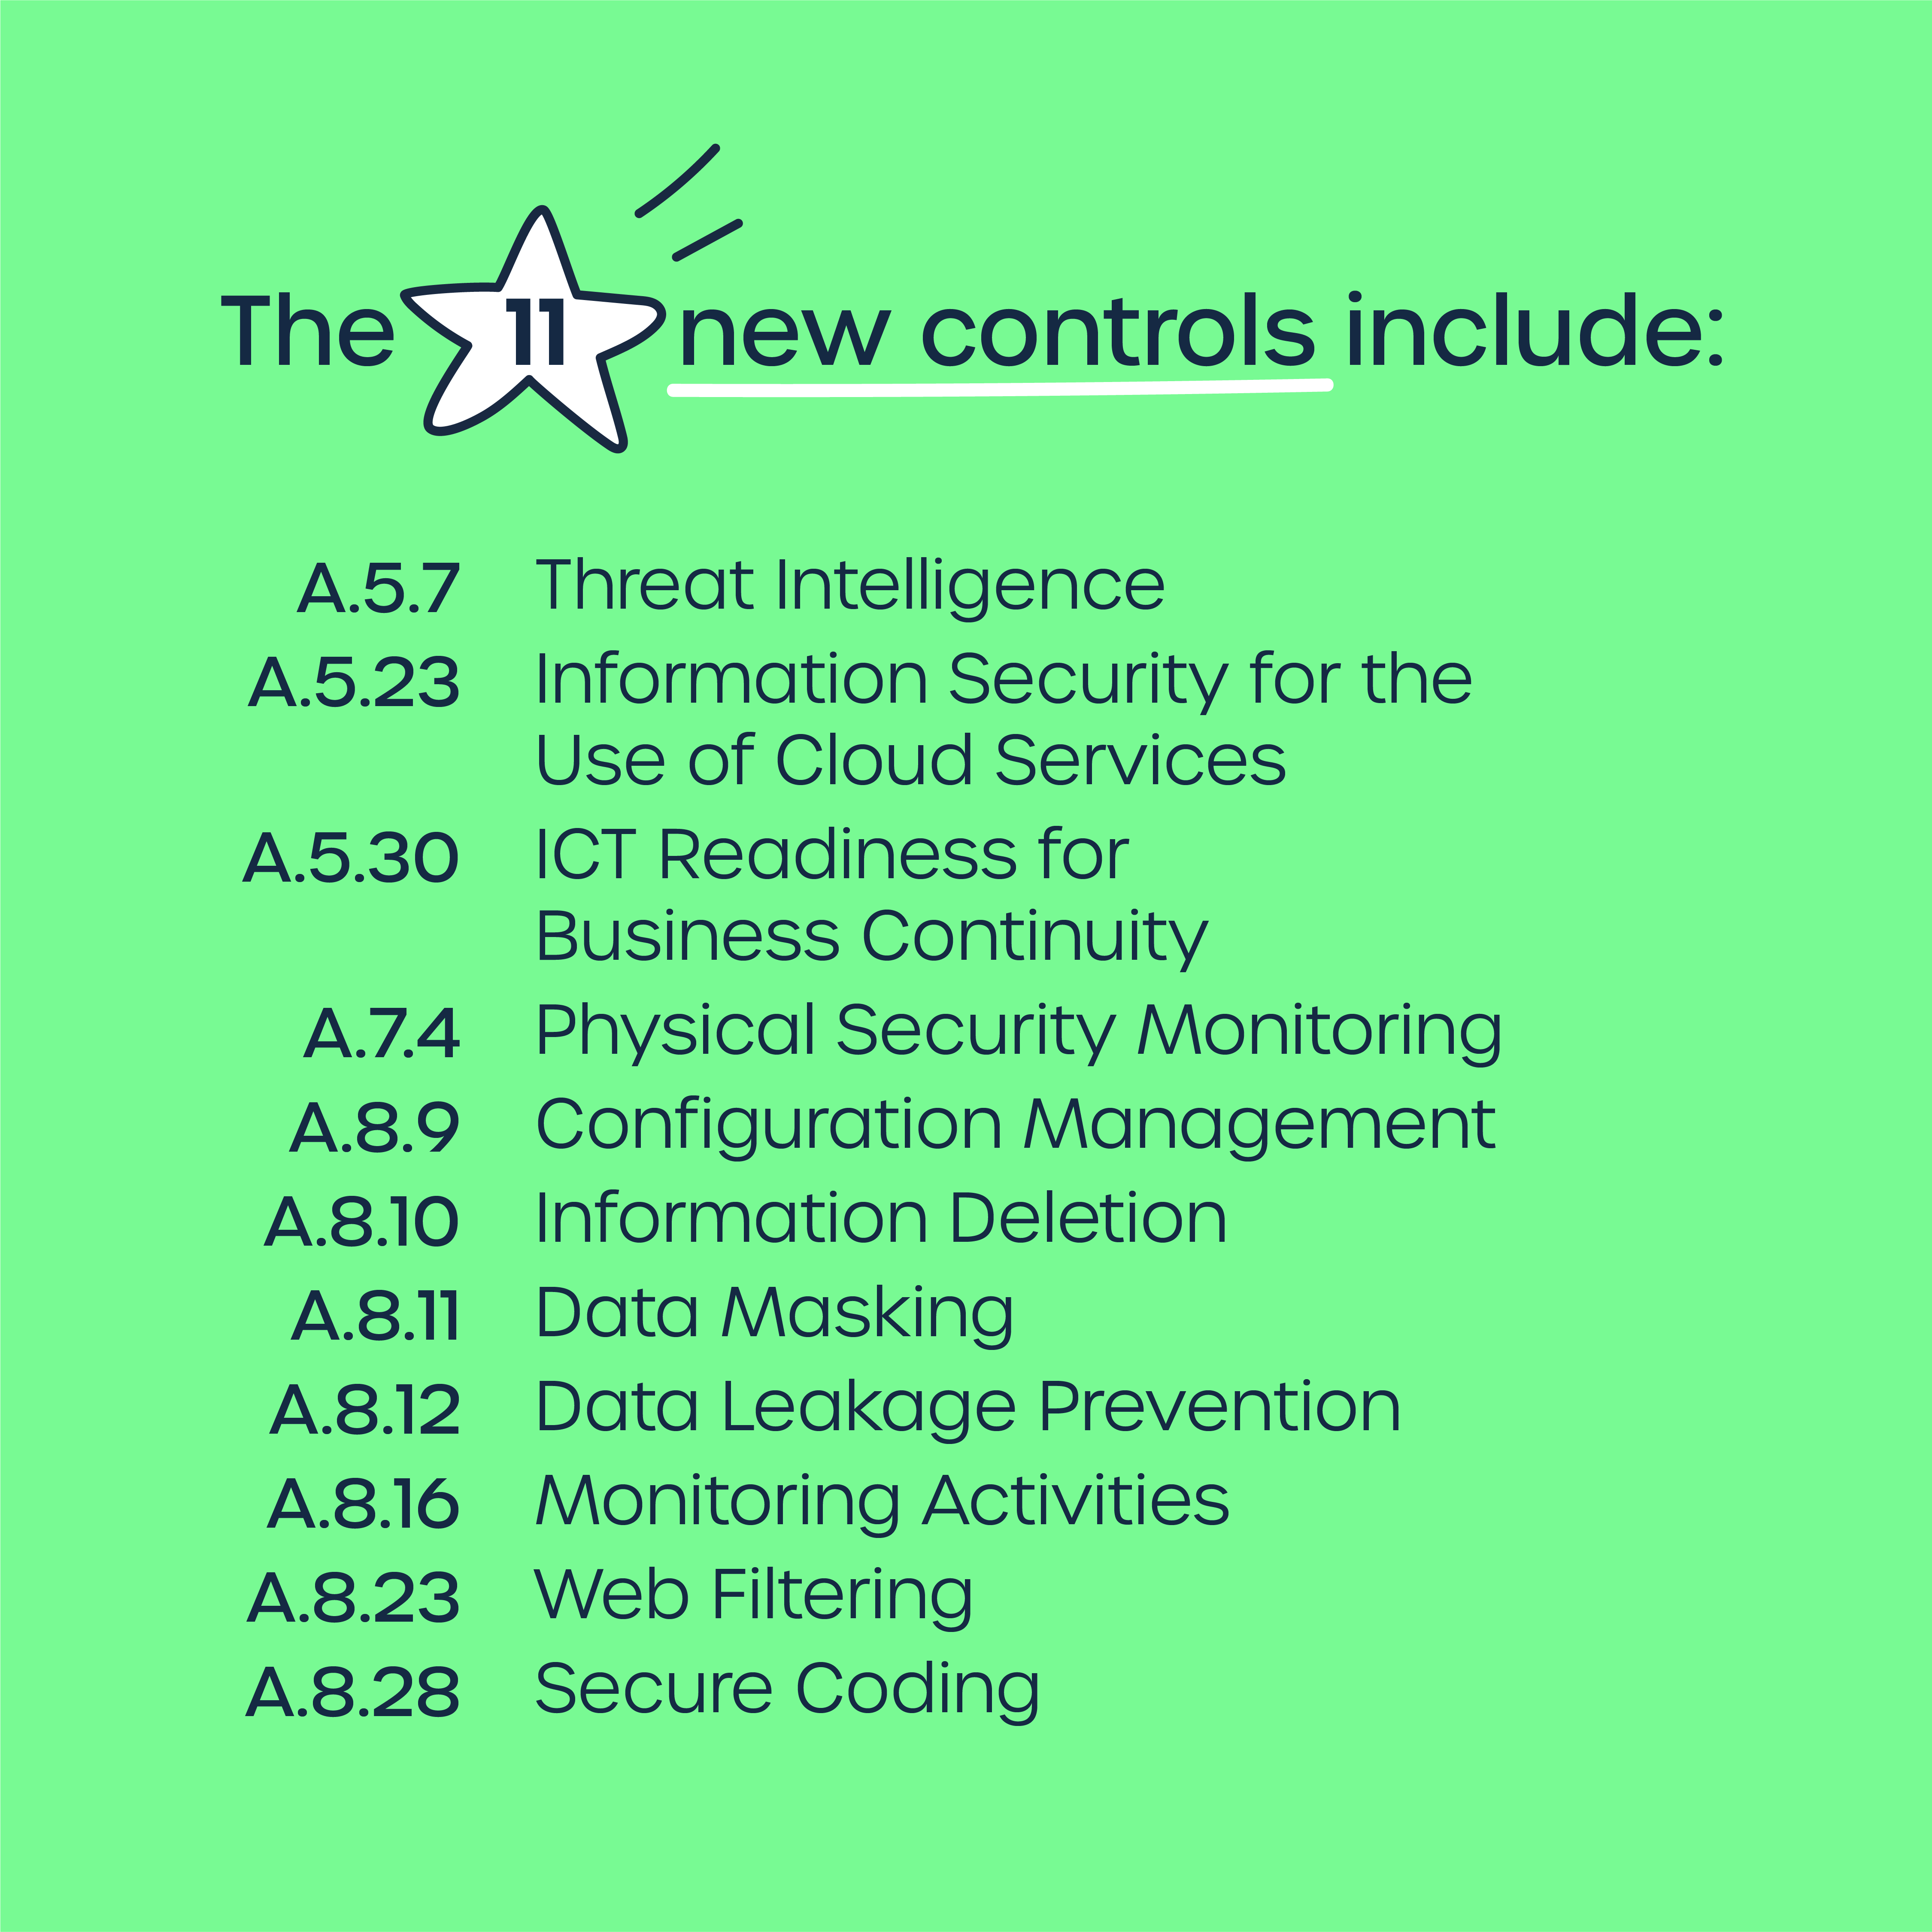 11 new controls